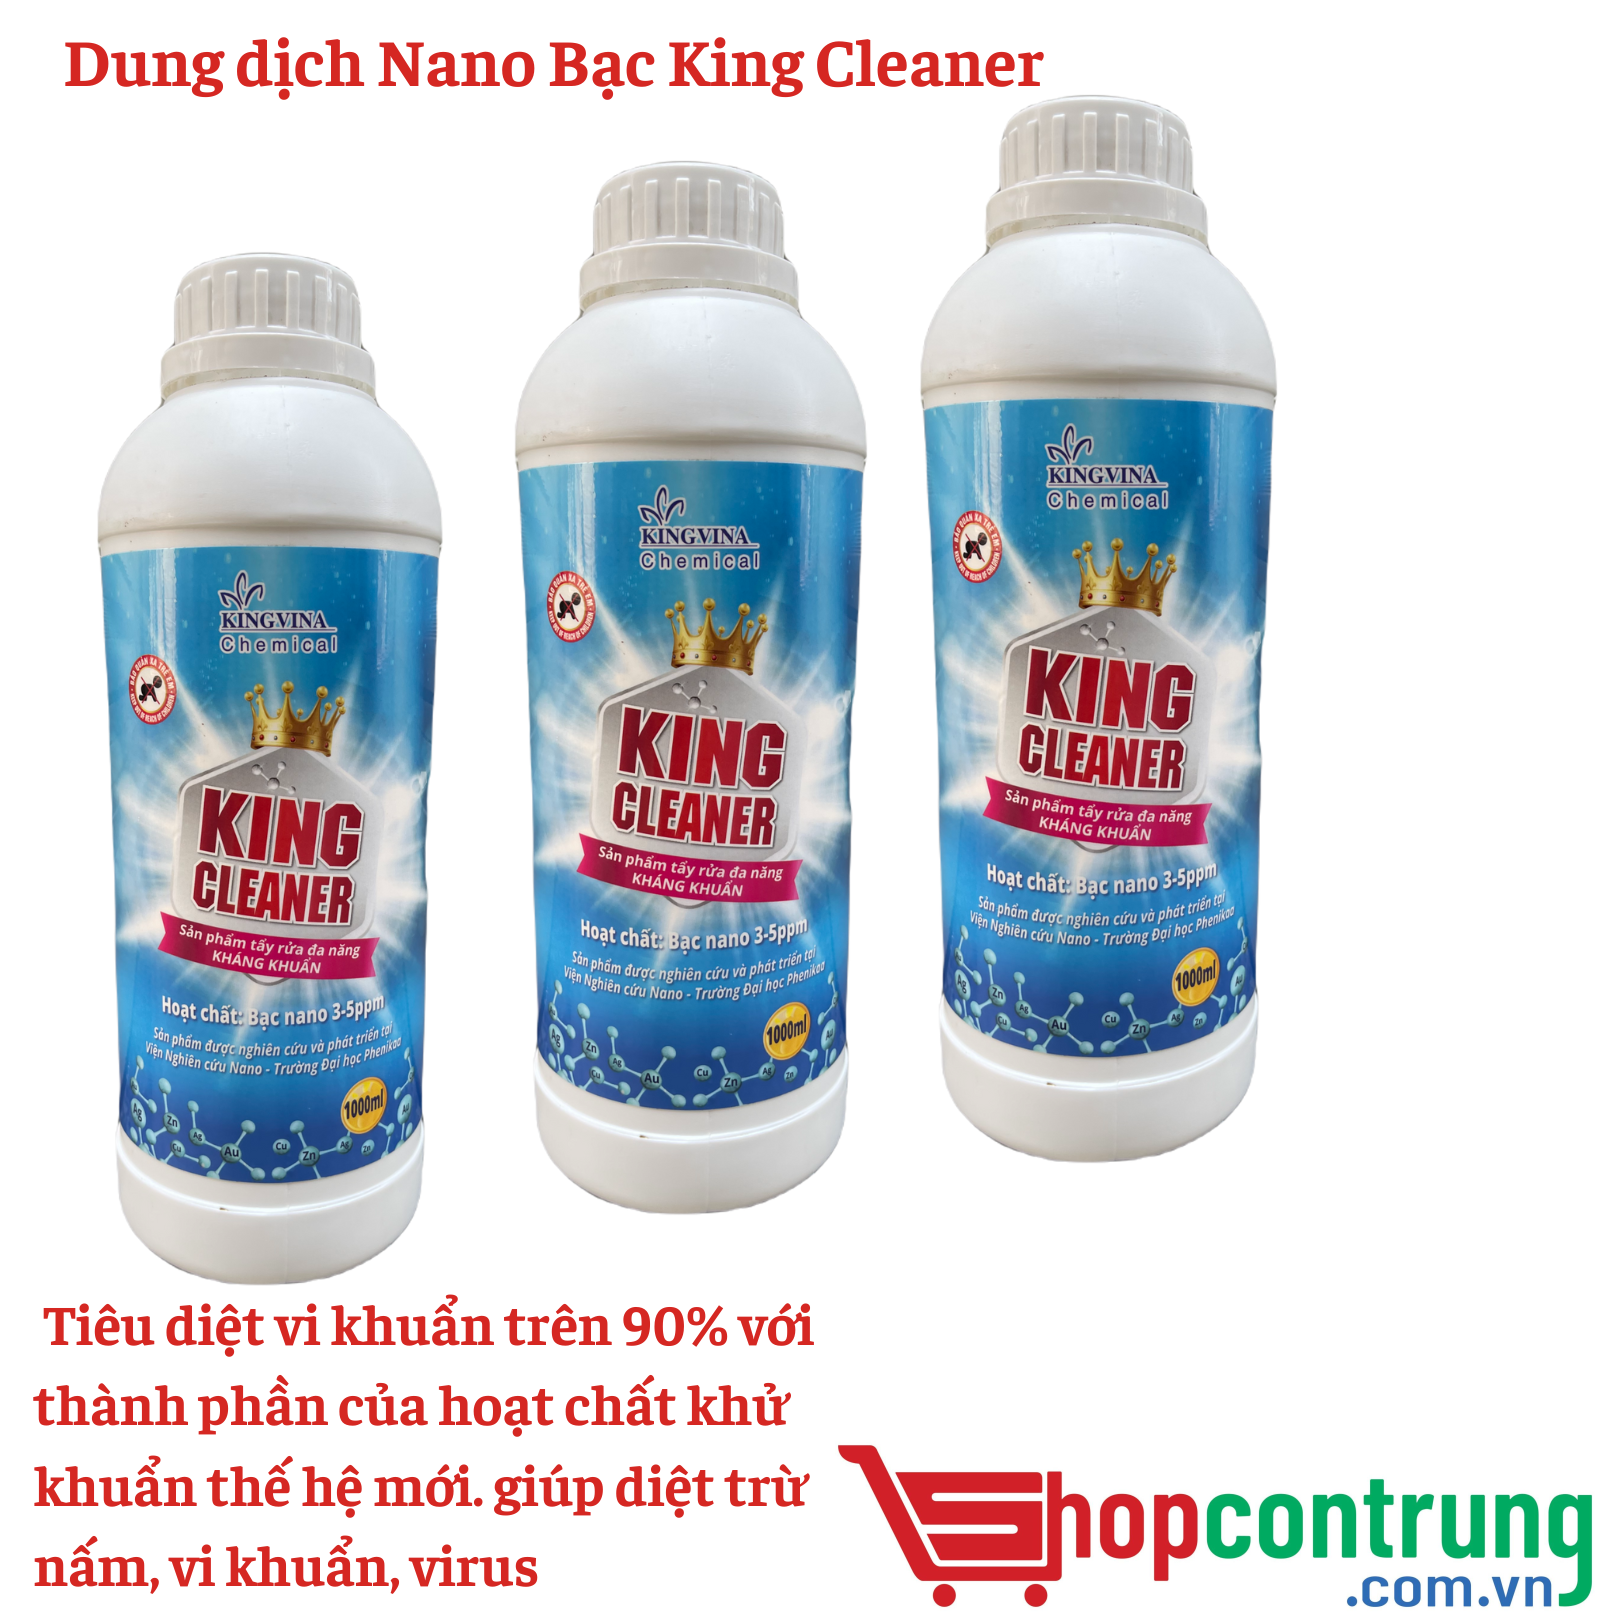 Dung dịch Nano Bạc King Cleaner